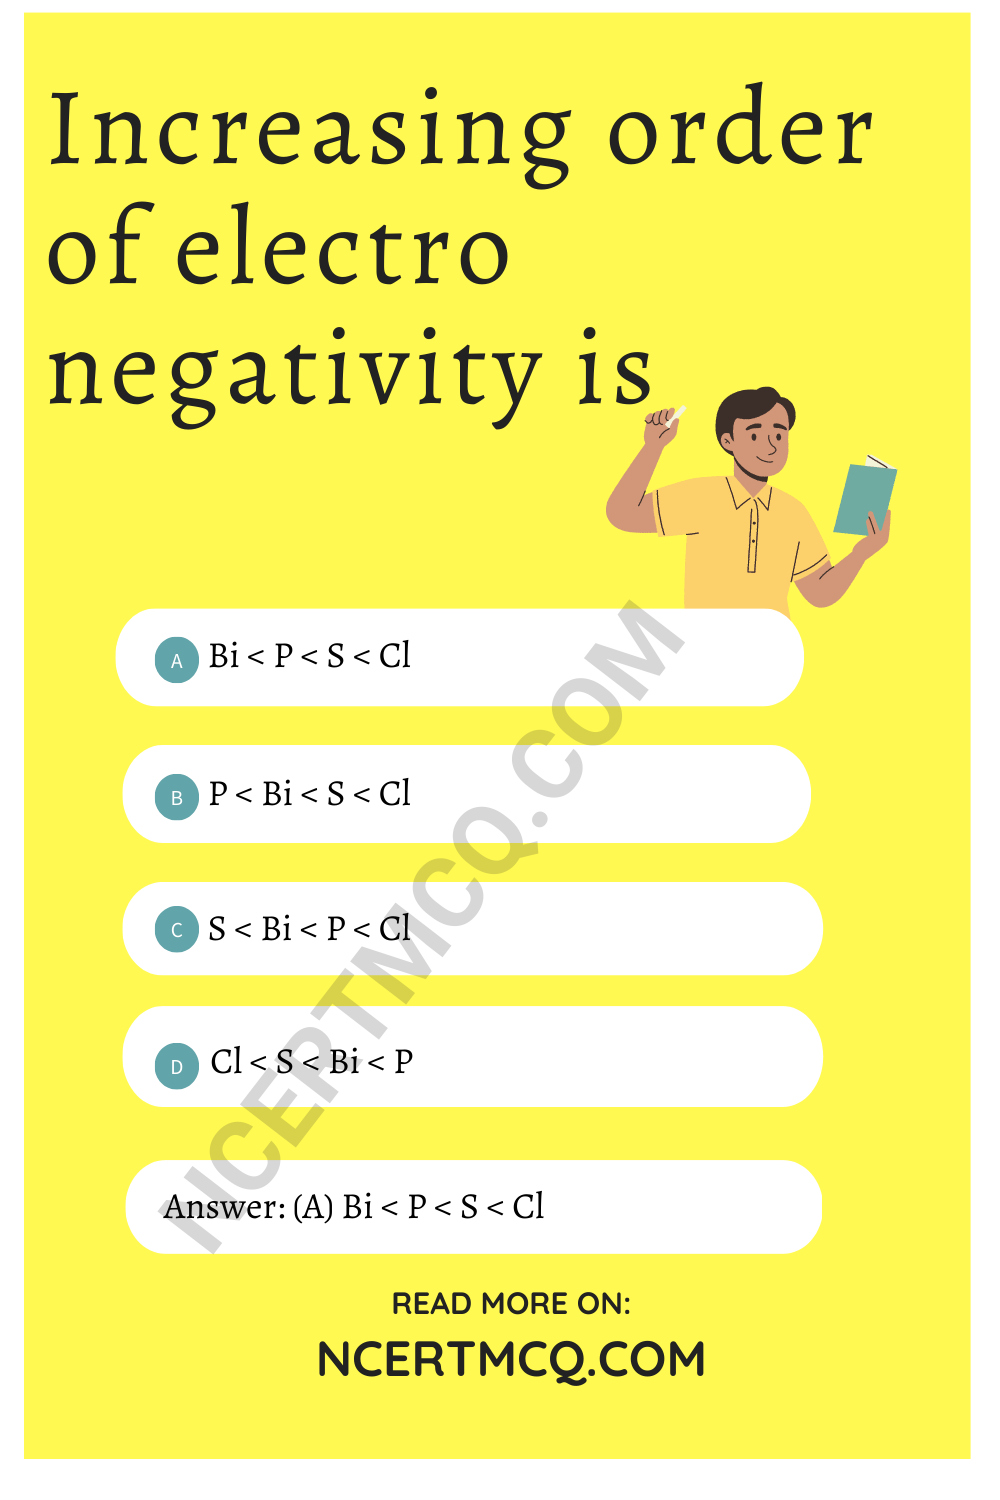 Increasing order of electro negativity is